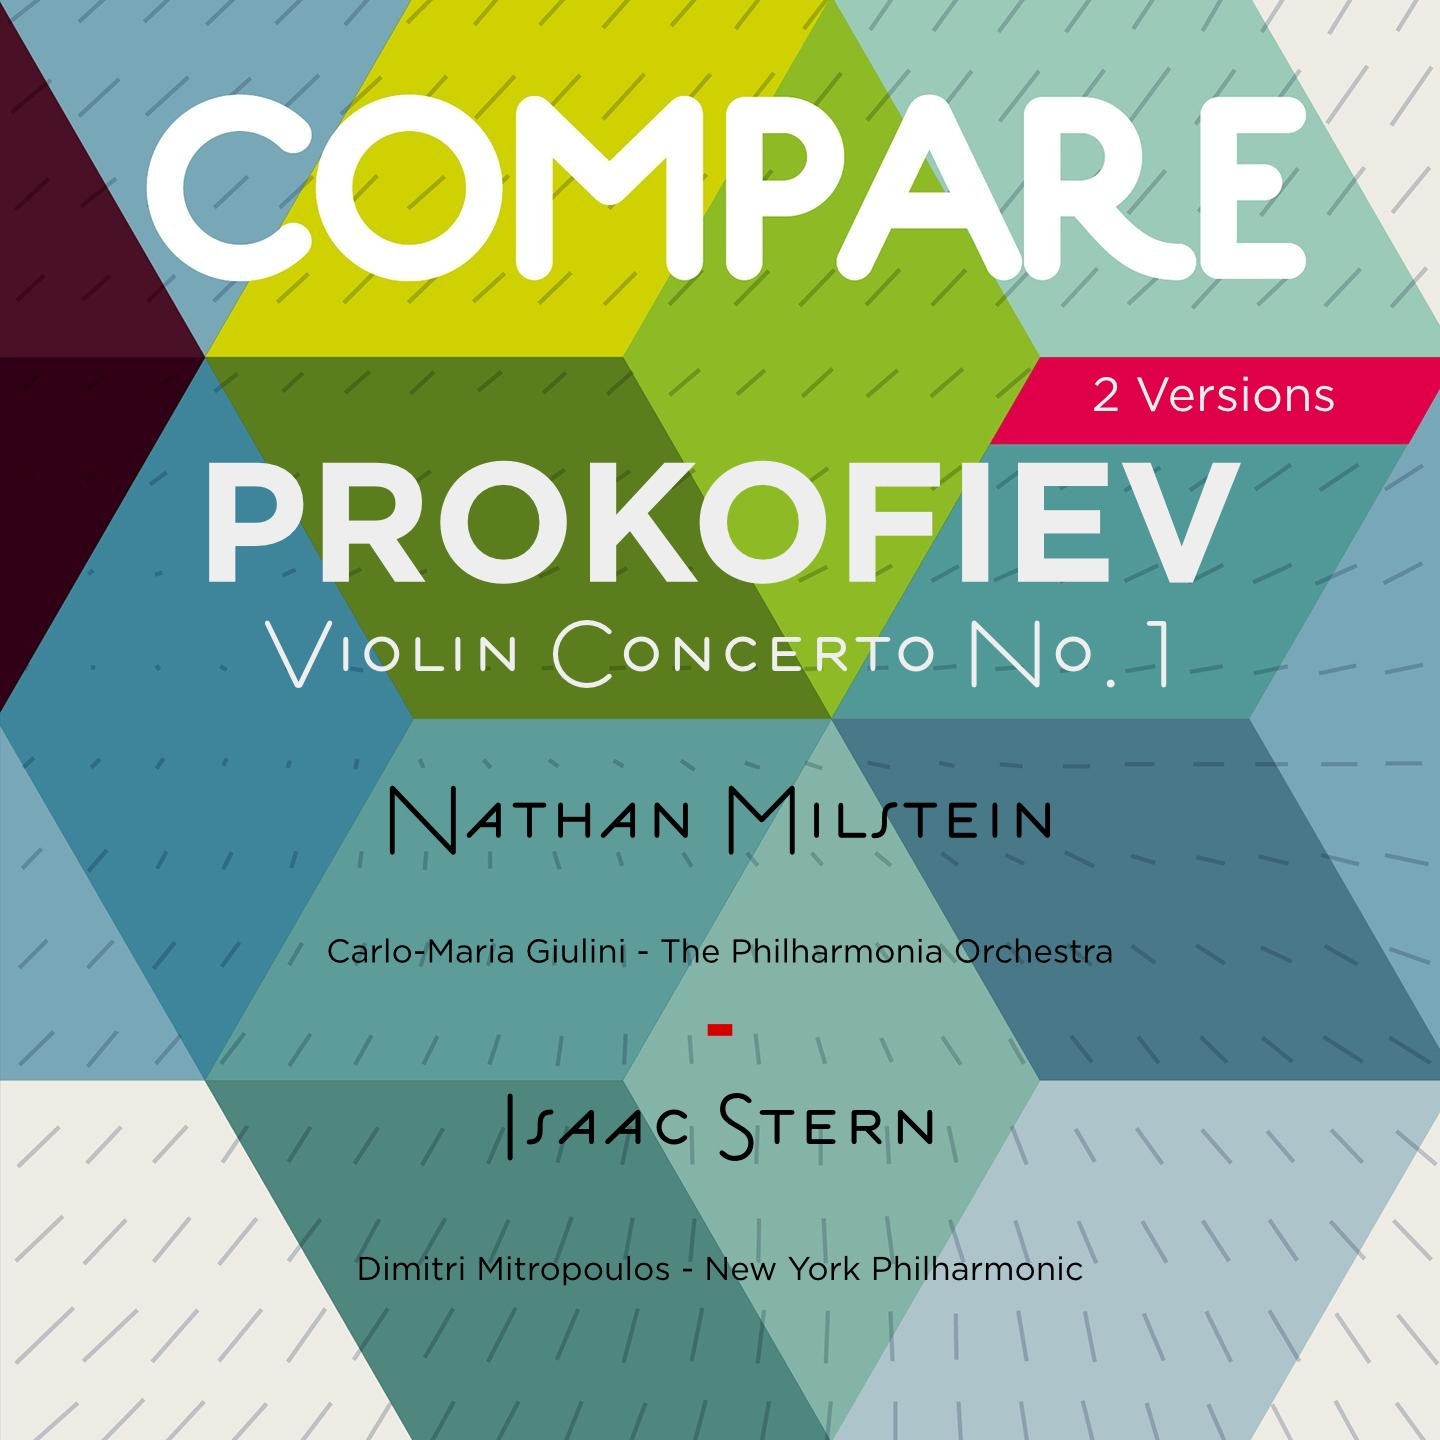 Violin Concerto No. 1 in D Major, Op. 19: III. Moderato. Allegro moderato